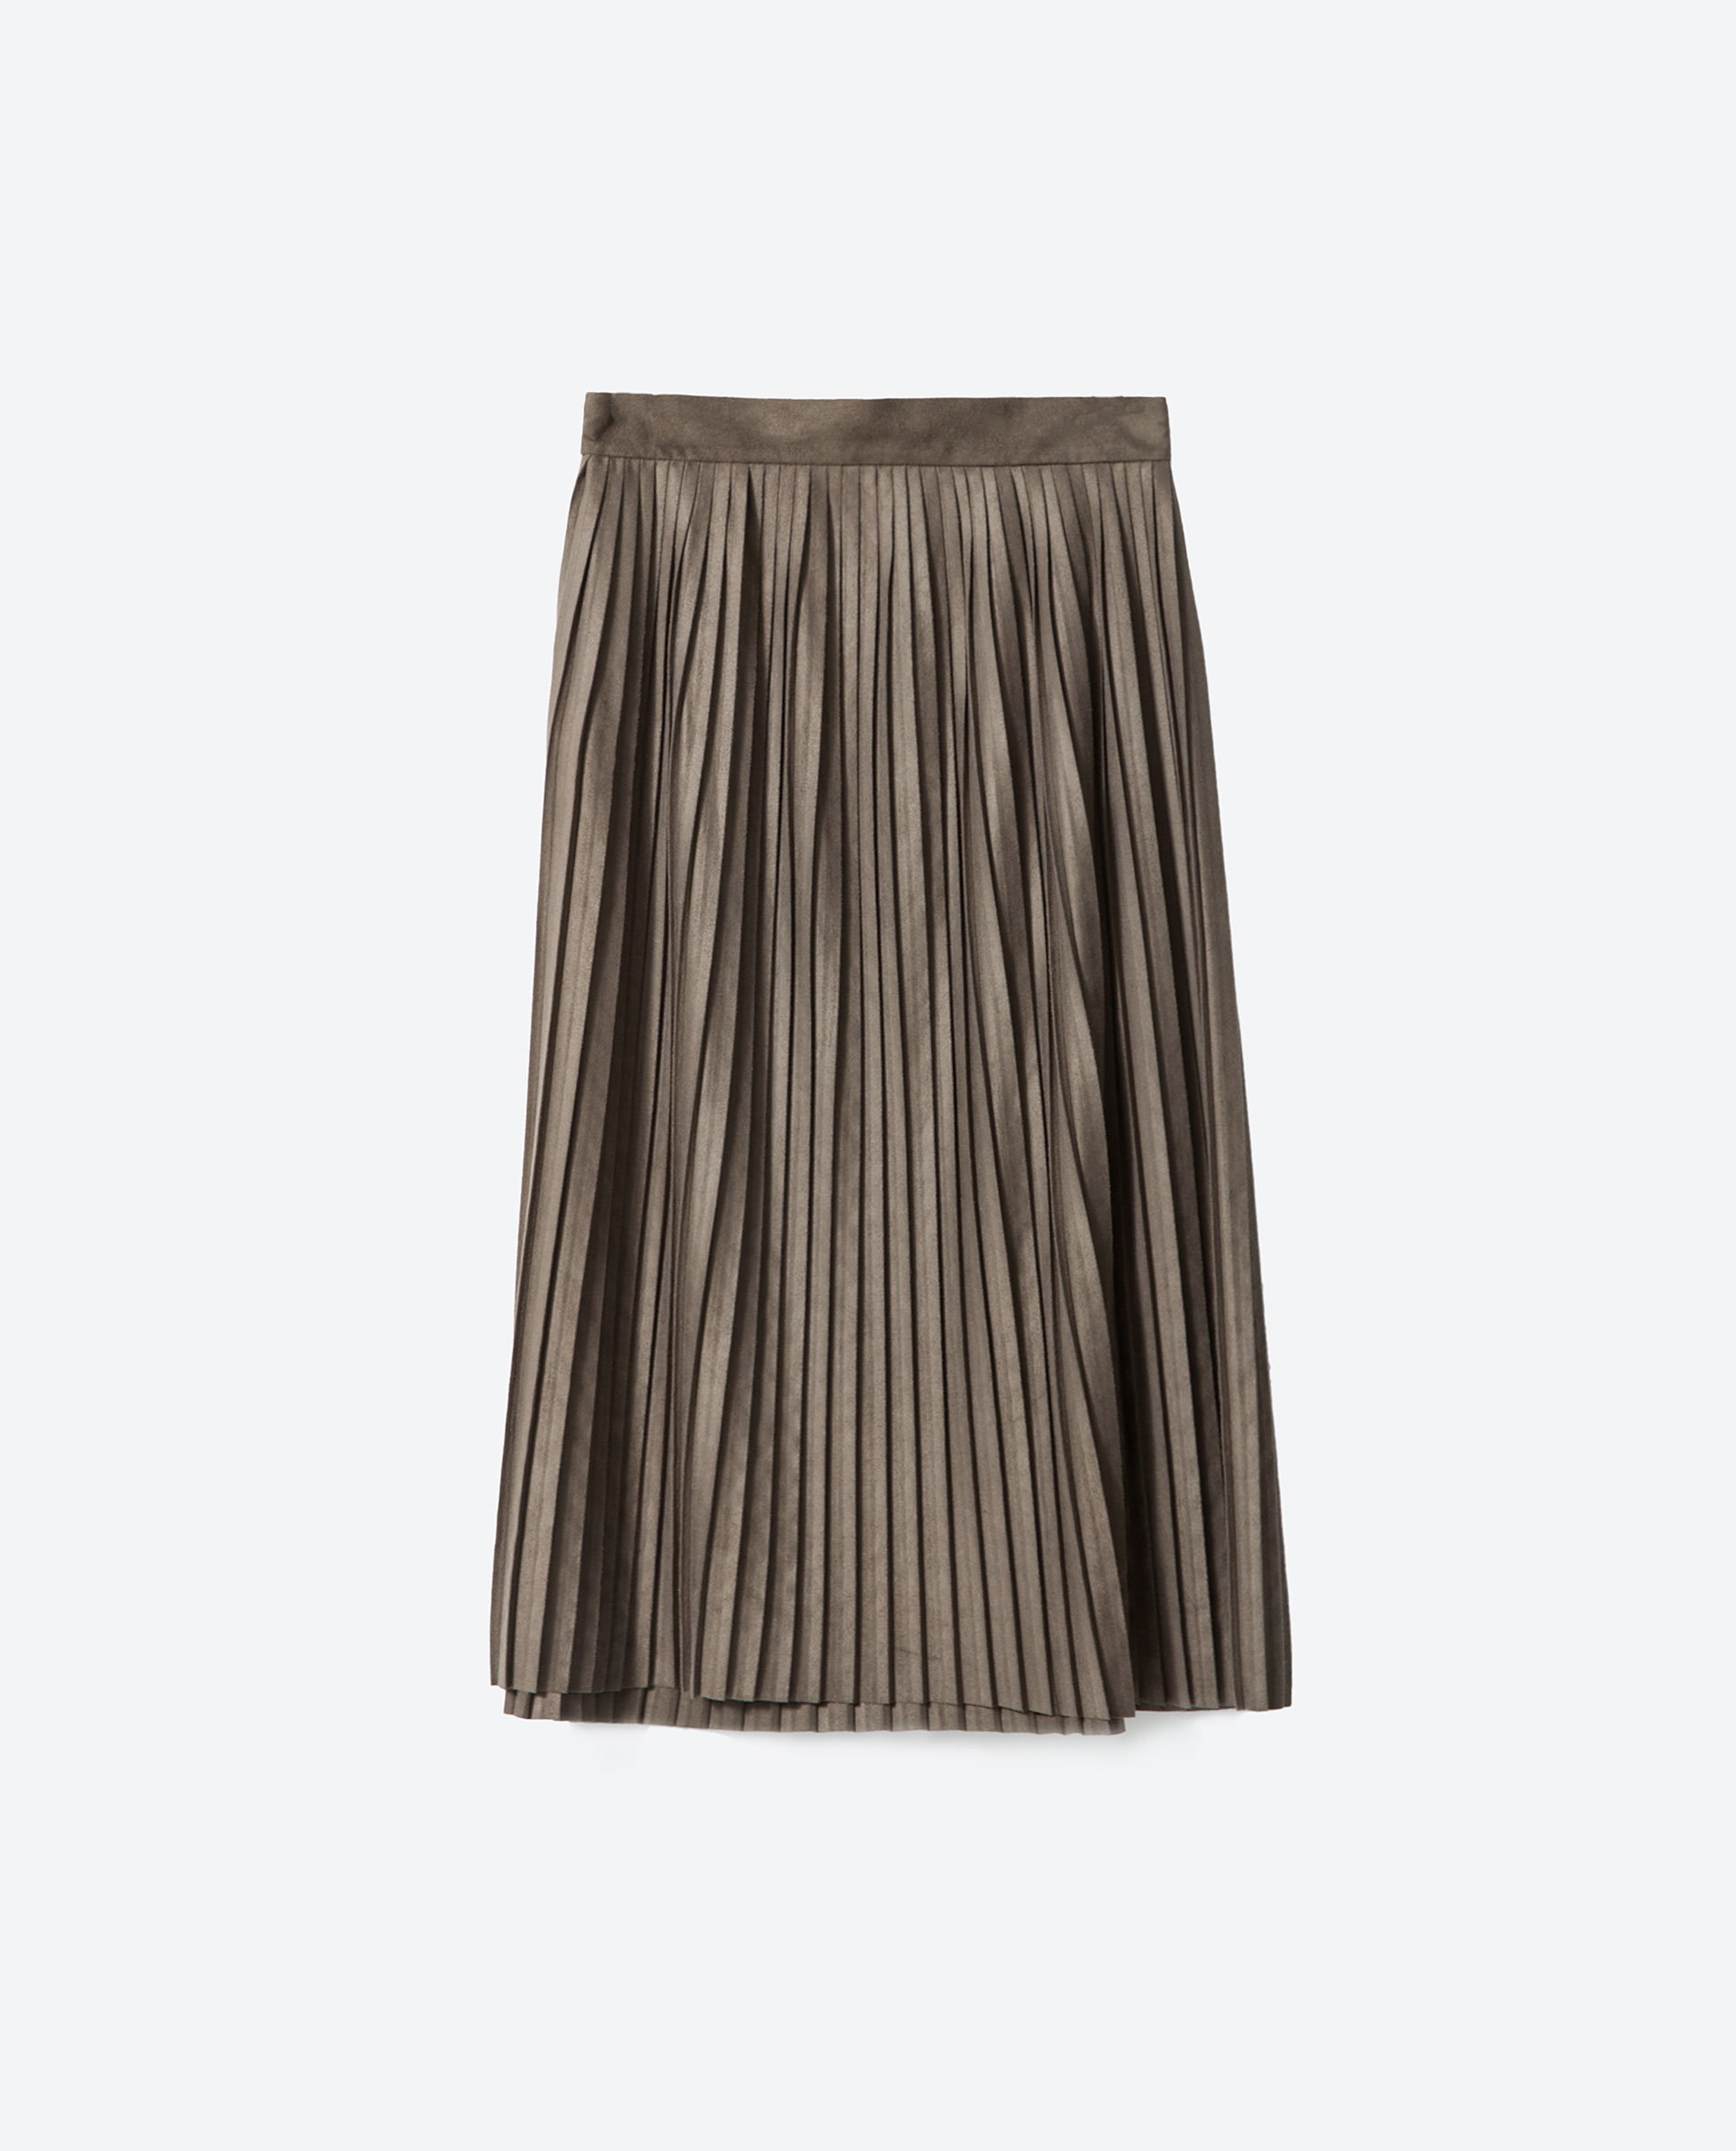 Zara Accordion Pleat Skirt in Khaki | Lyst